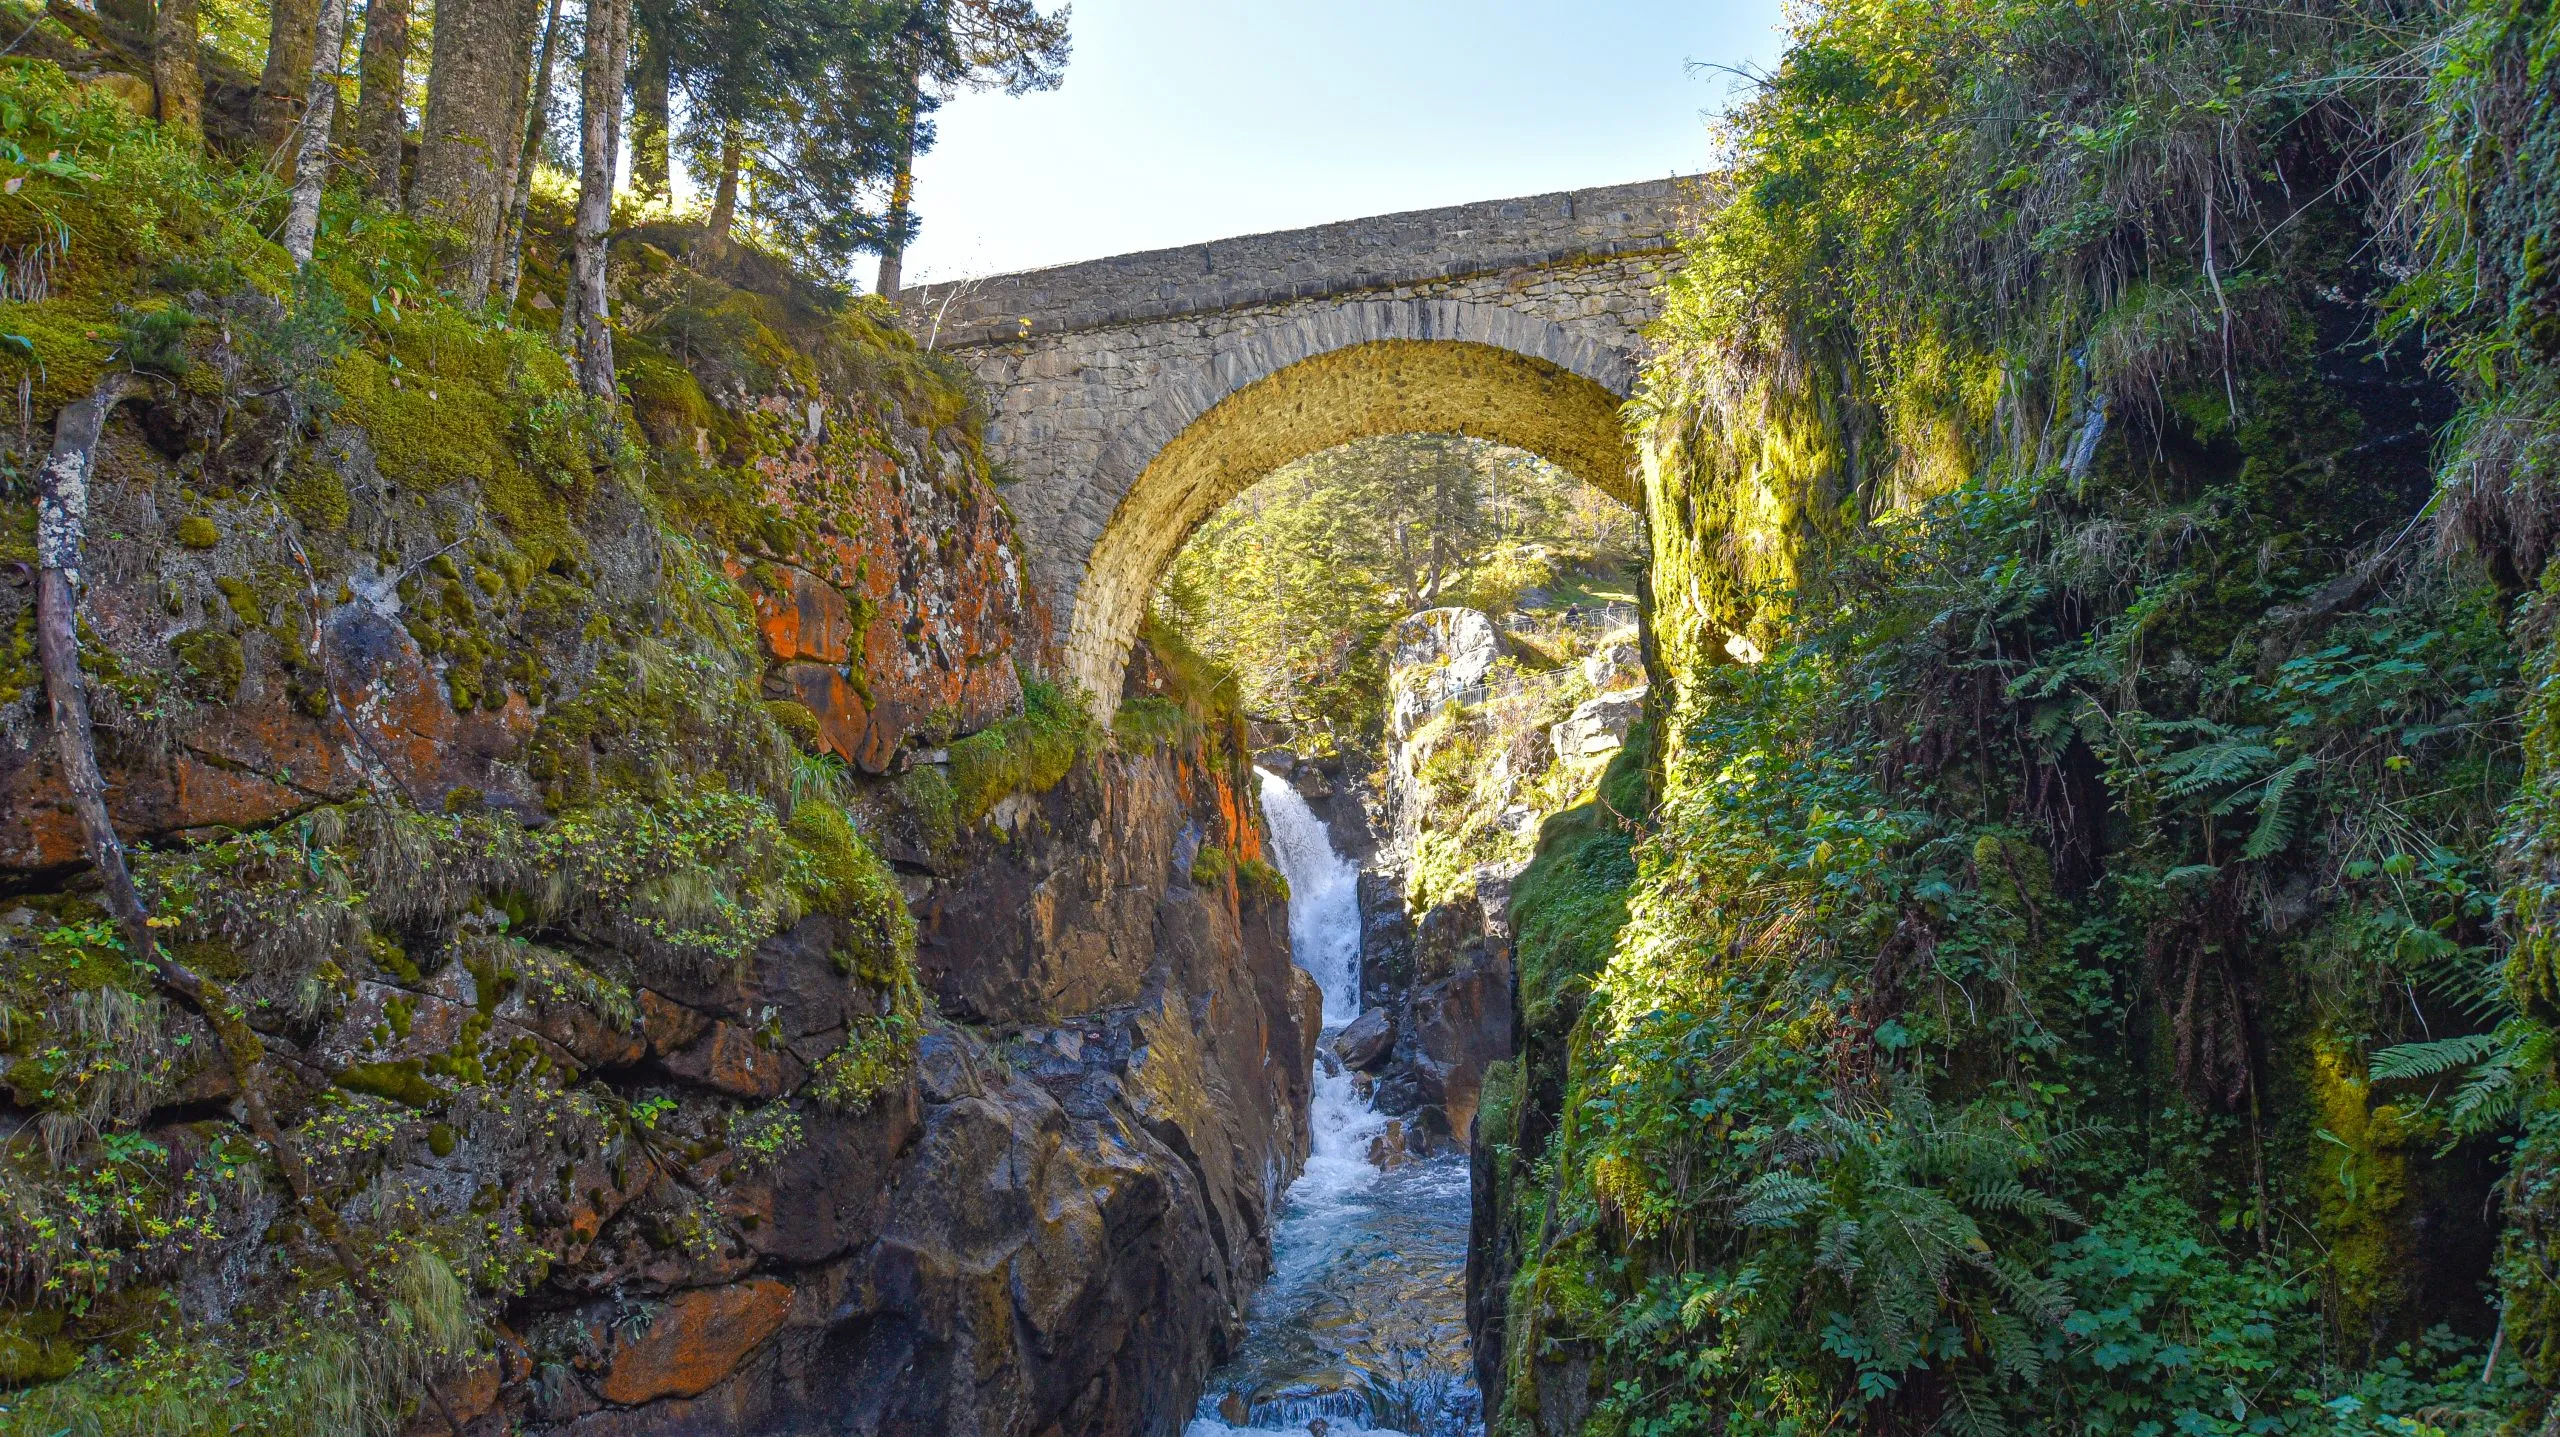 Cauterets, Ranska - 10. lokakuuta 2021: Pont d'Espagnen silta Gave de Marcadaun yli Pyreneiden kansallispuistossa.